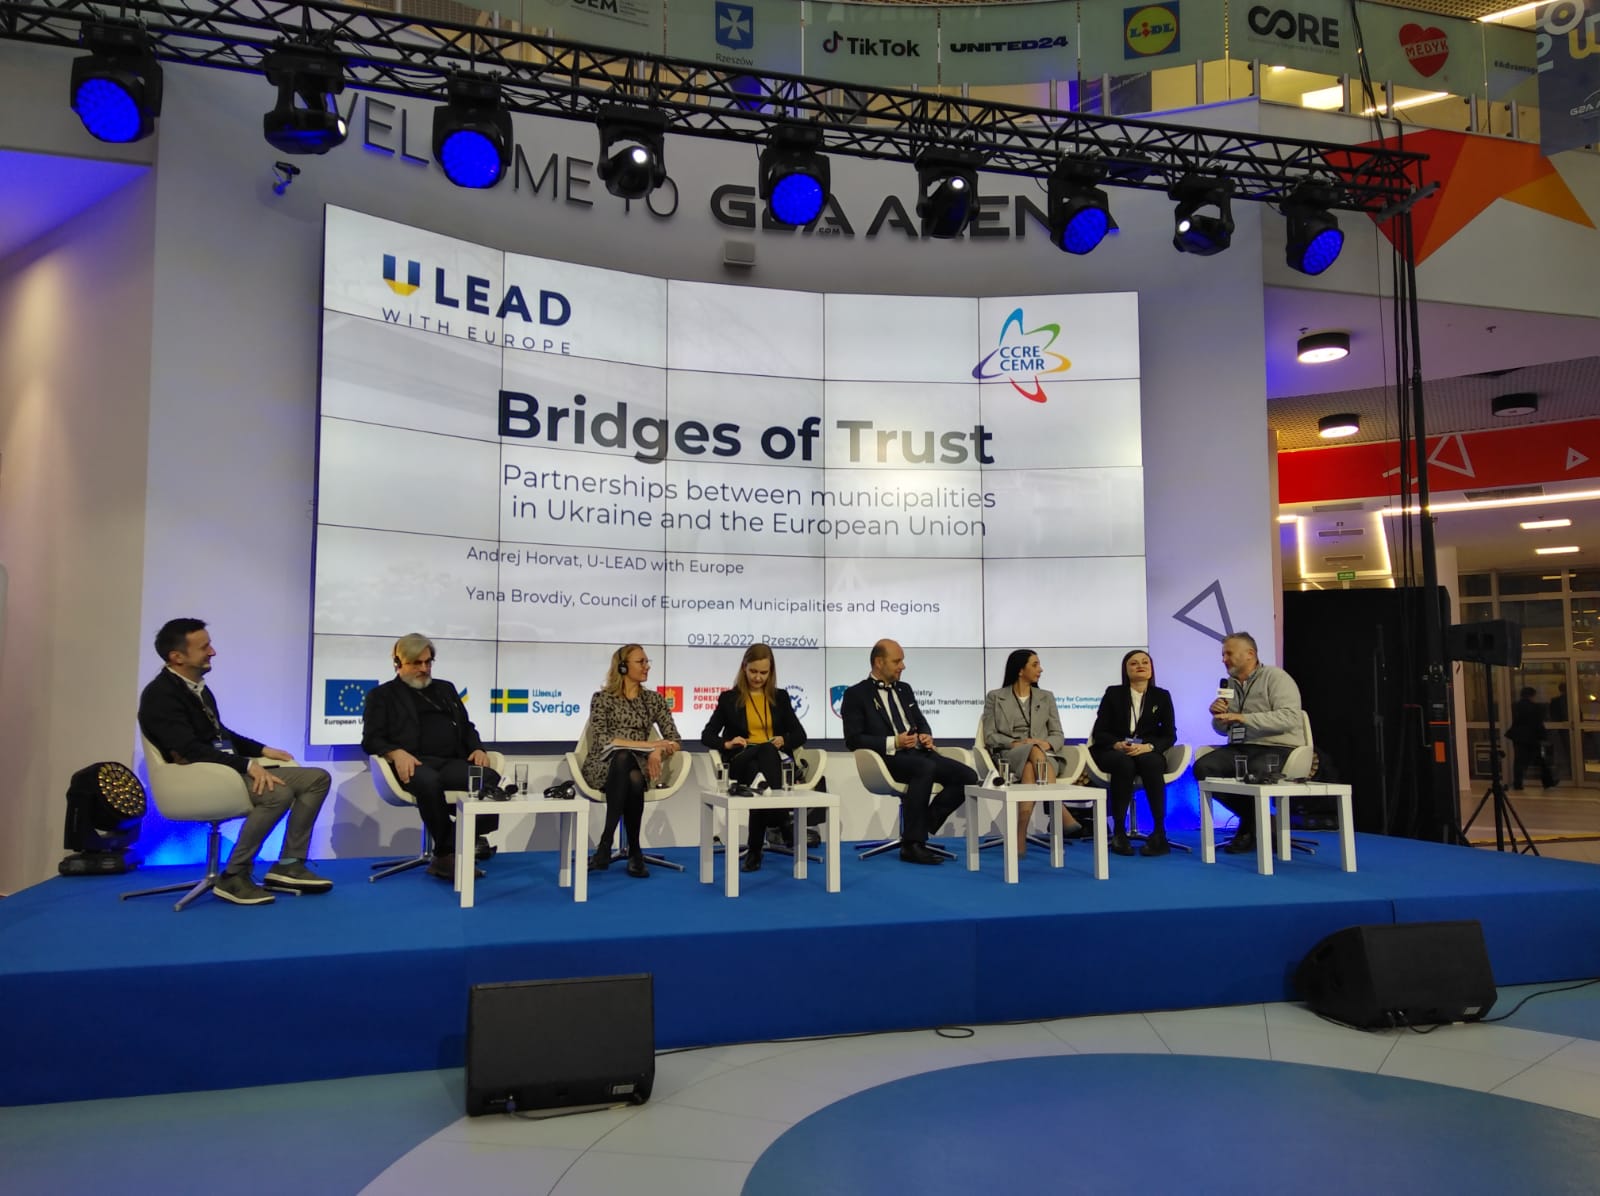 Presentation of the "Bridges of Trust"